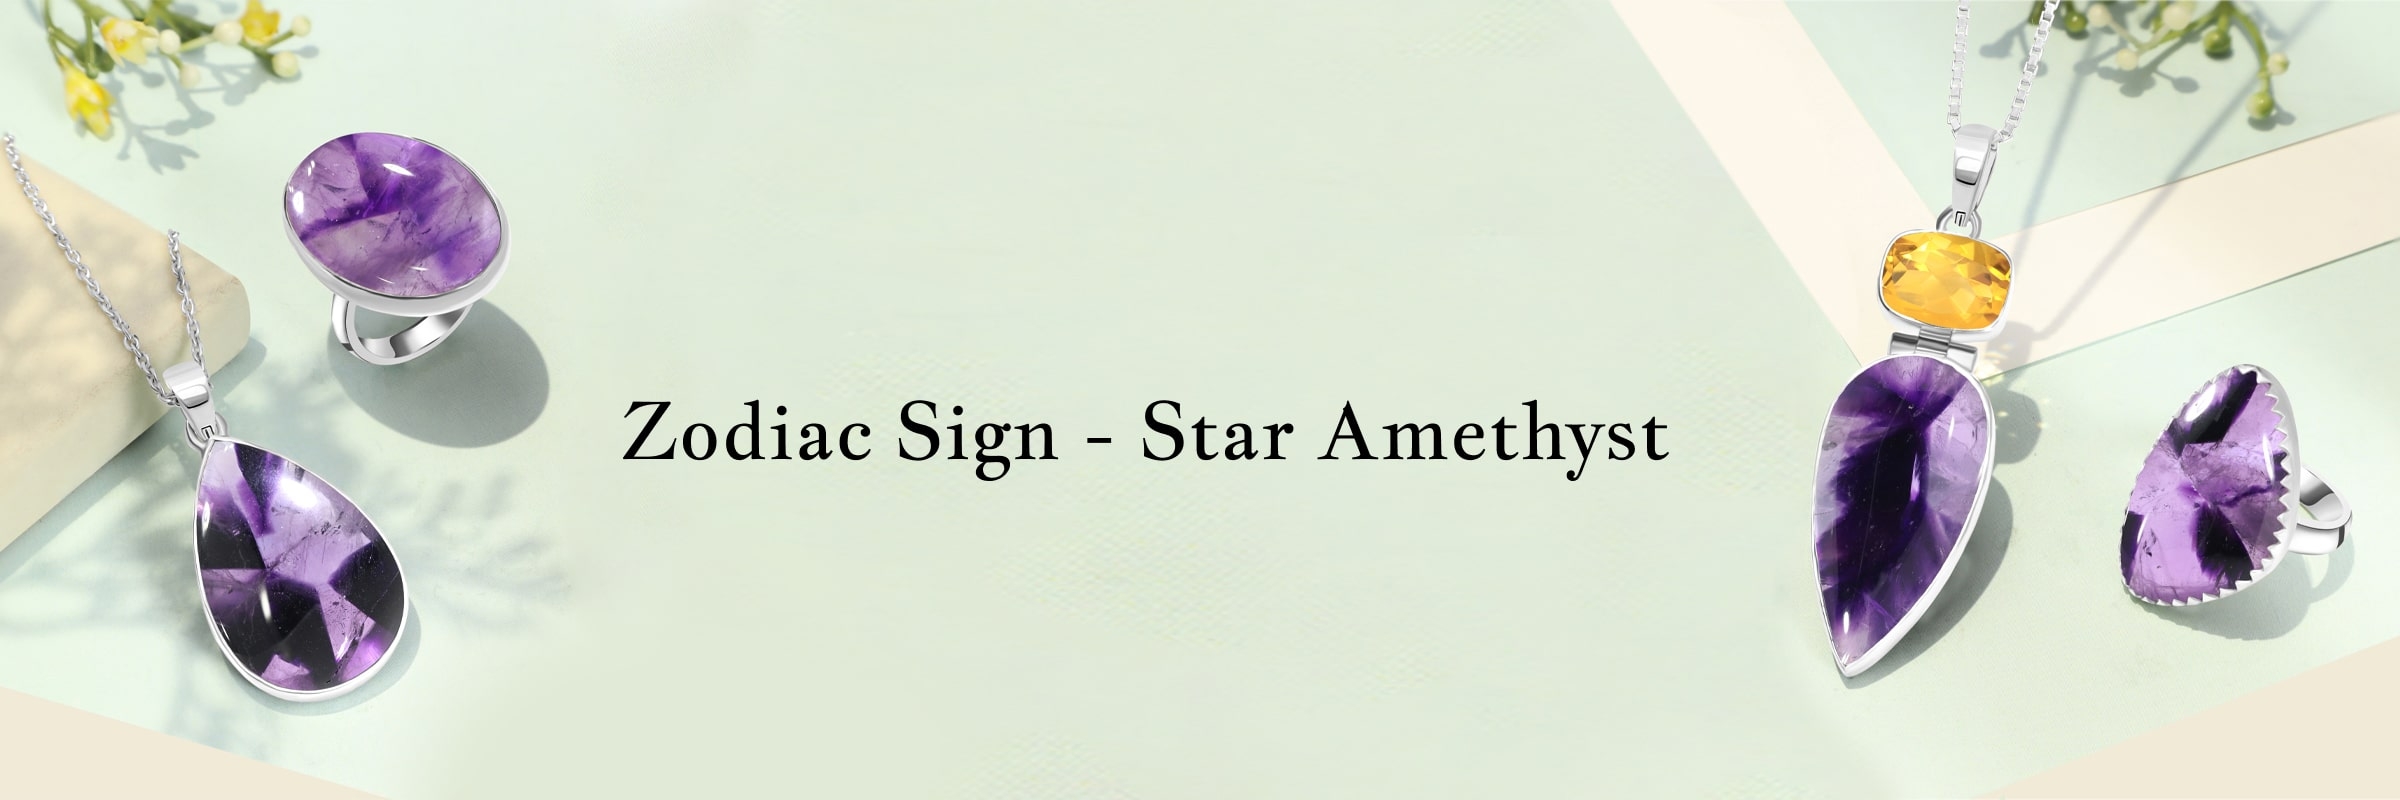 Zodiac sign